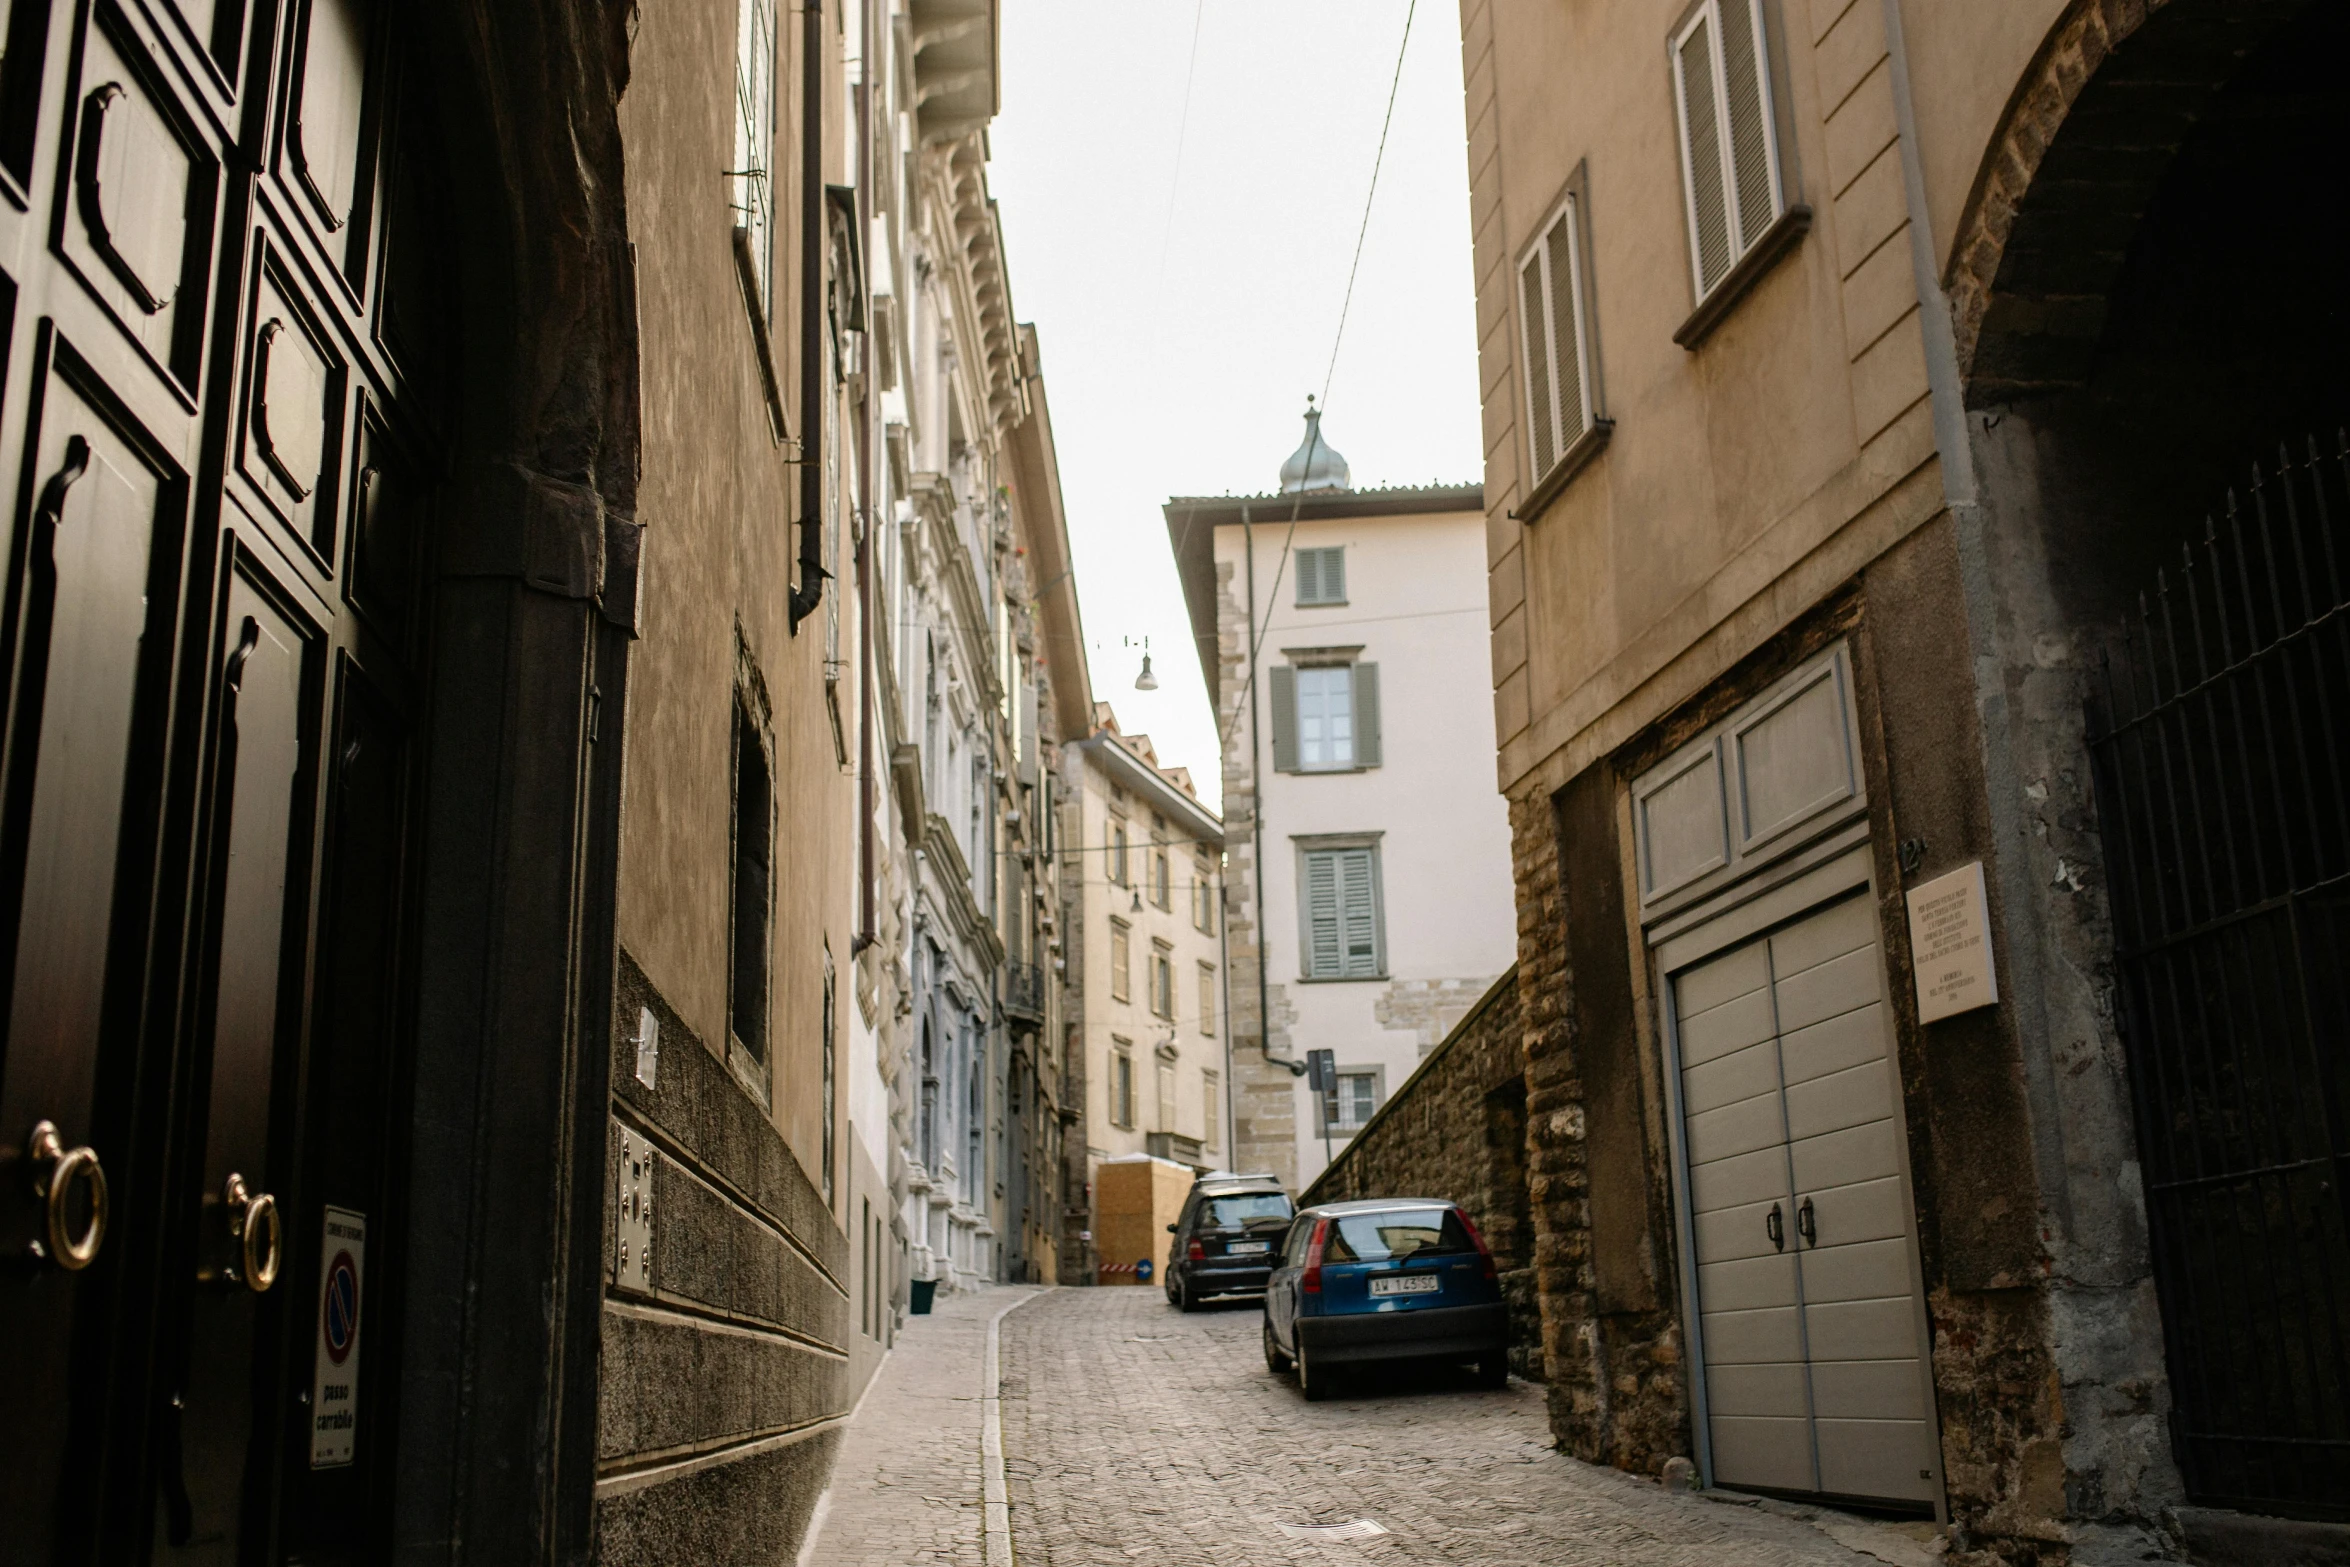 a car is parked on a cobblestone street, pexels contest winner, renaissance, white pale concrete city, portrait image, italian, view from across the street